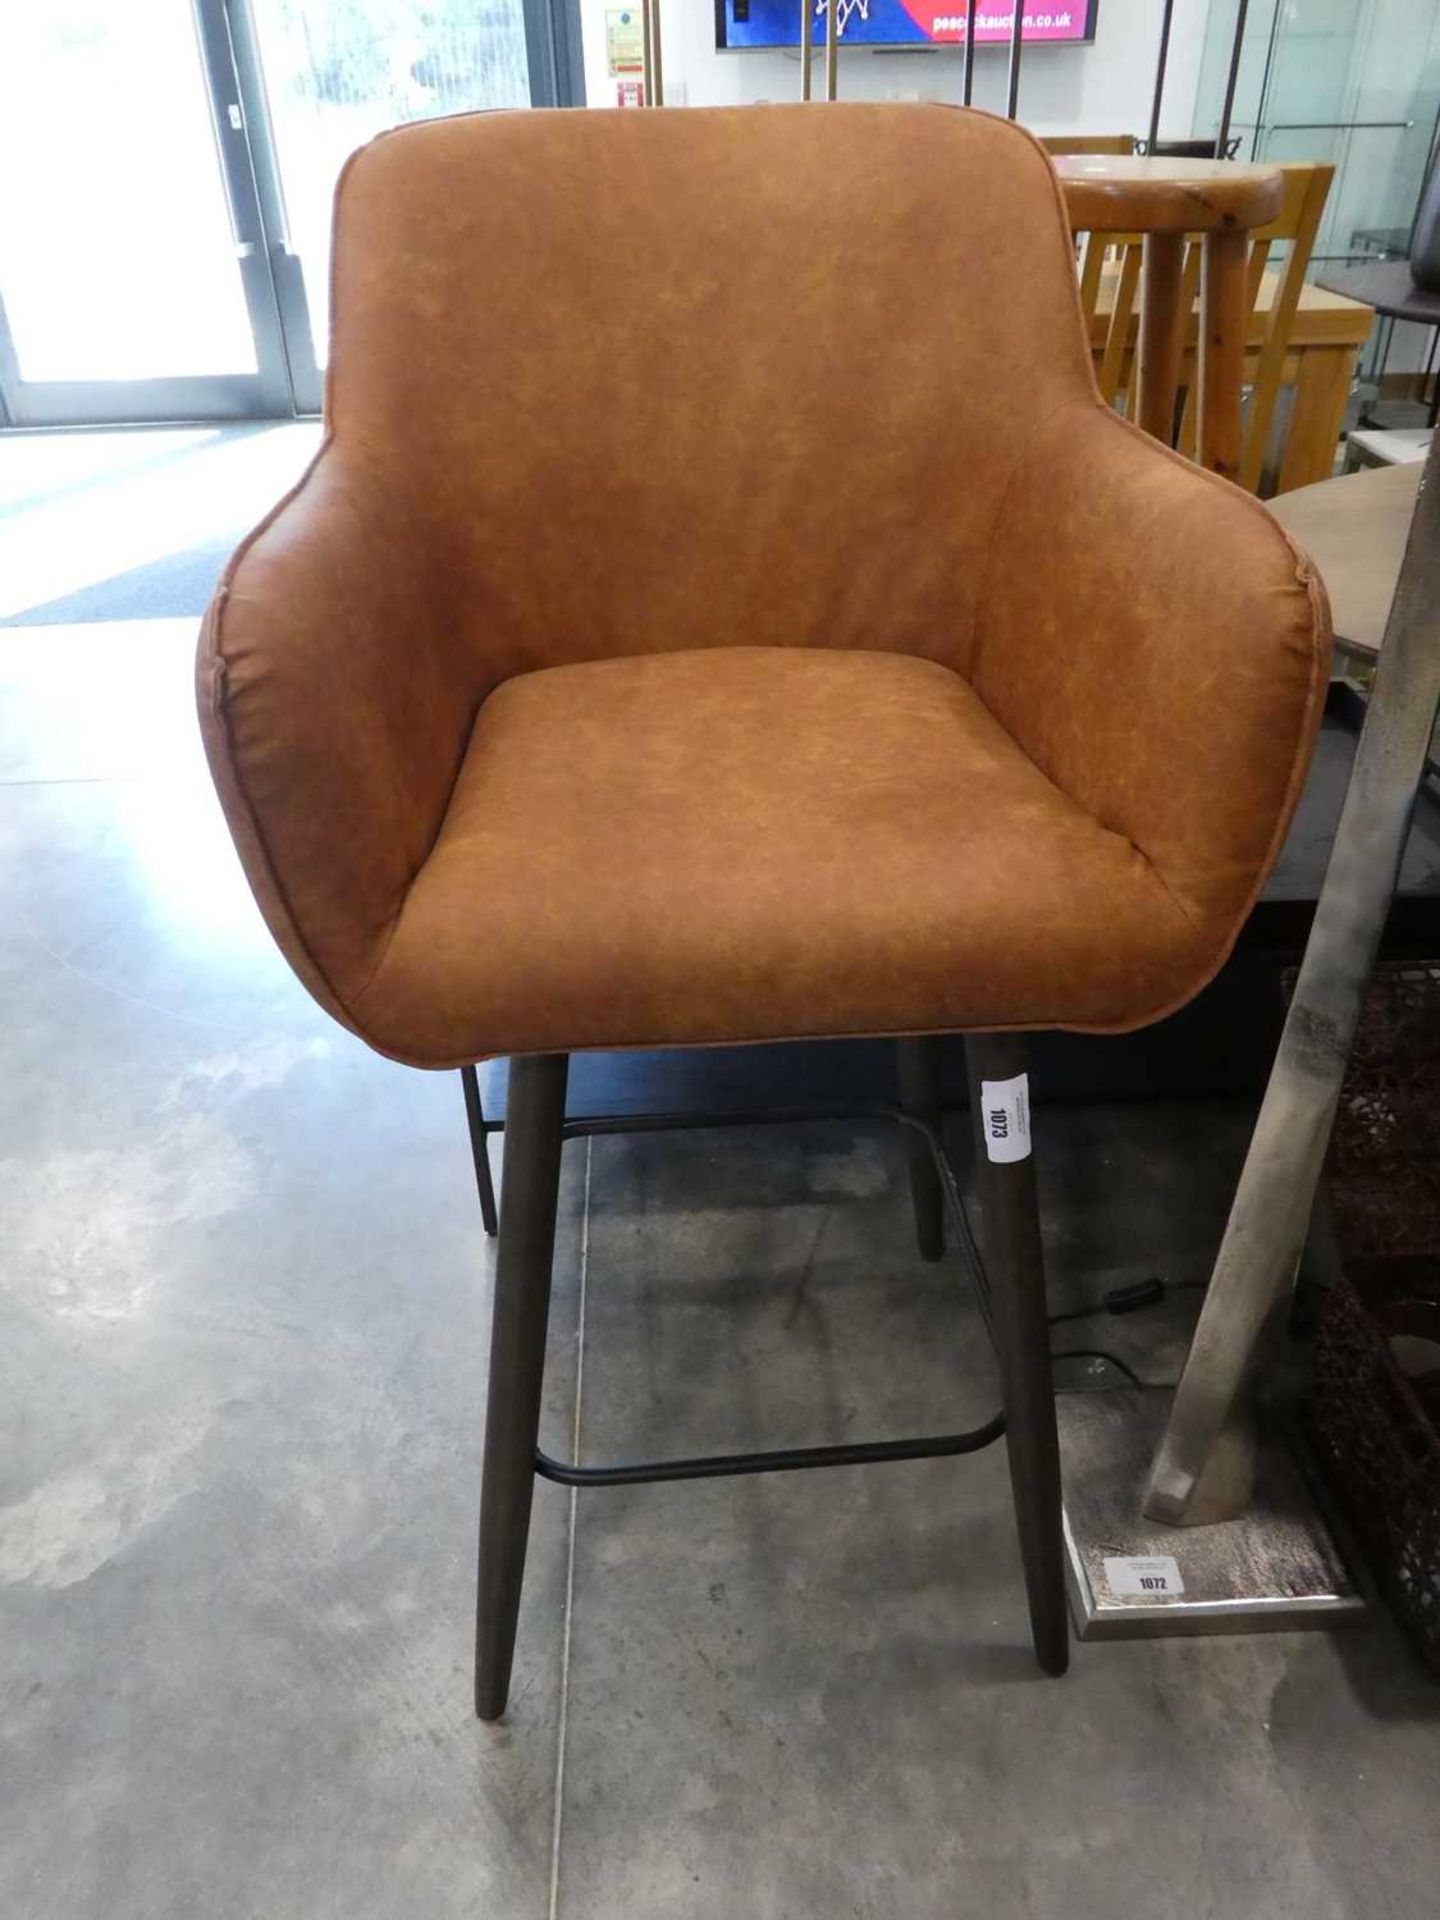 +VAT Modern brown leatherette upholstered bar height chair